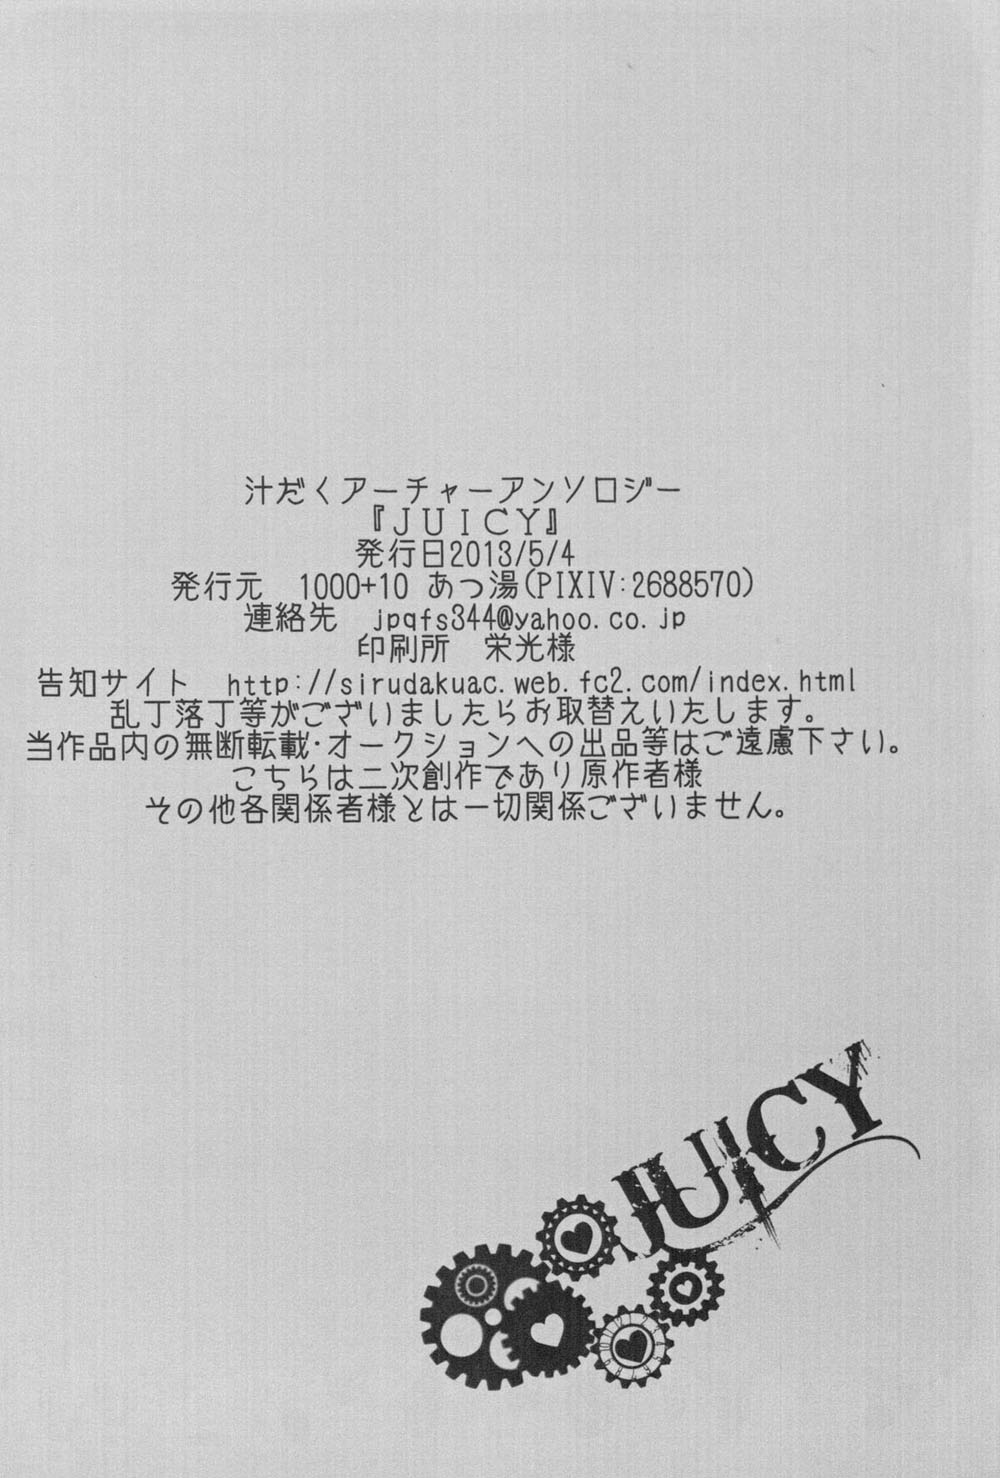 [1000+10 (Atsuyu)] Juicy (Fate/Stay Night) [1000+10 (あつ湯)] Juicy (Fate/Stay Night)